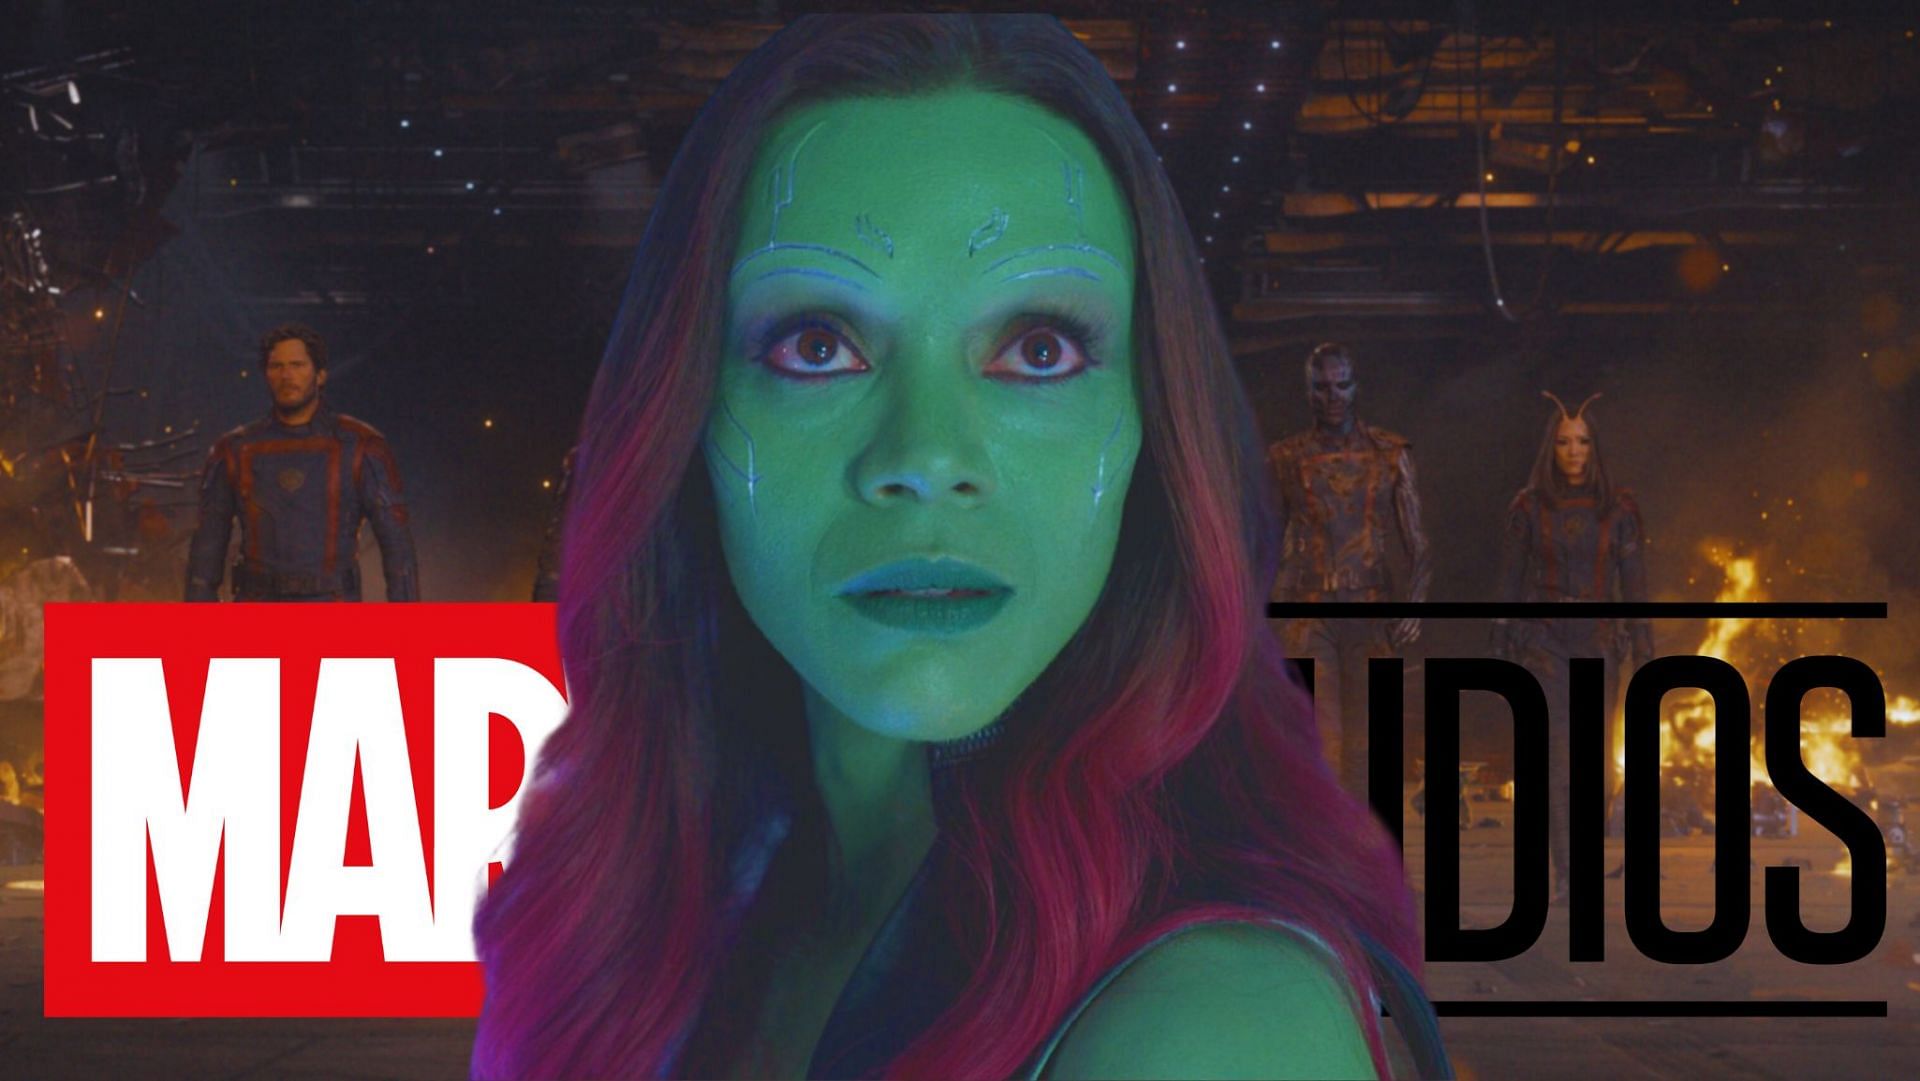 Zoe Saldana bids farewell to her role as Gamora in Marvel